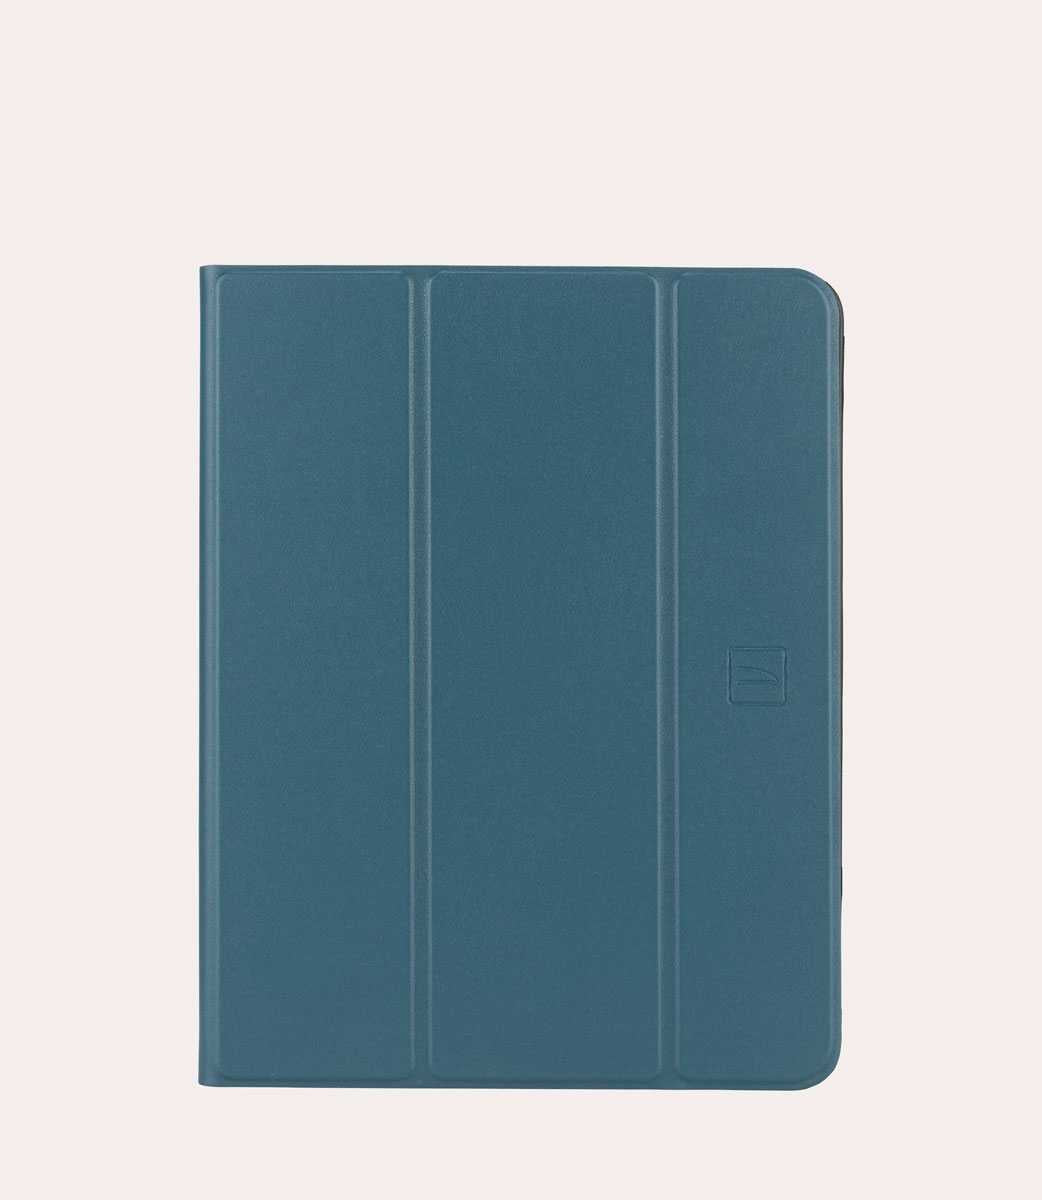 Tucano Premio Folio Case | Color Blue Scuro | Cases and Covers | Best iPad Accessories in Bahrain | Halabh